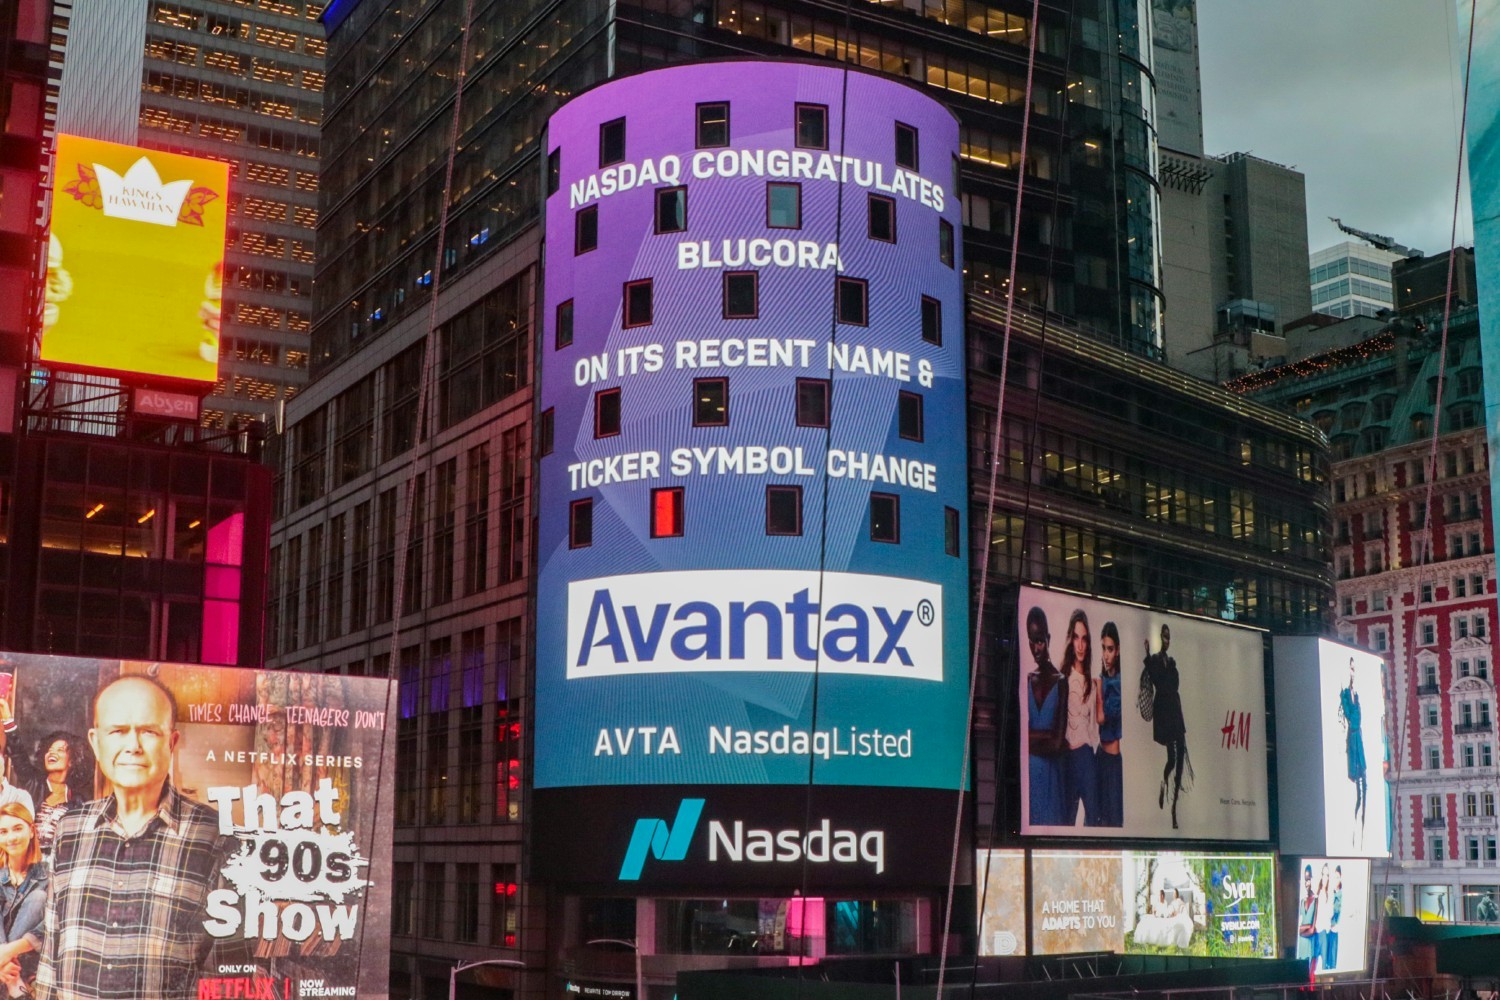 Blucora rebrands to Avantax, Inc. Nasdaq stock ticker change in Times Square